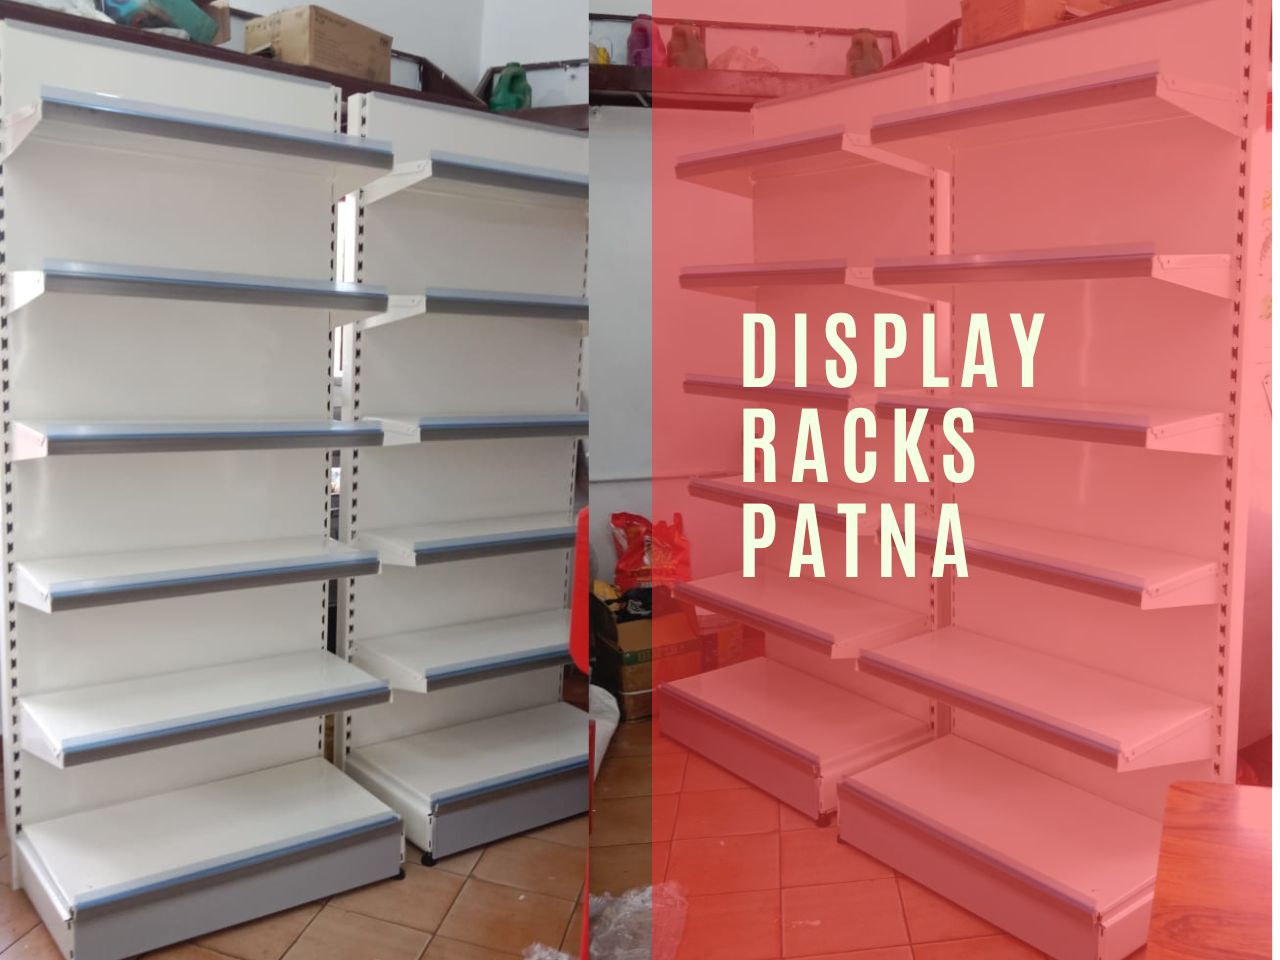 Display racks Patna.jpg